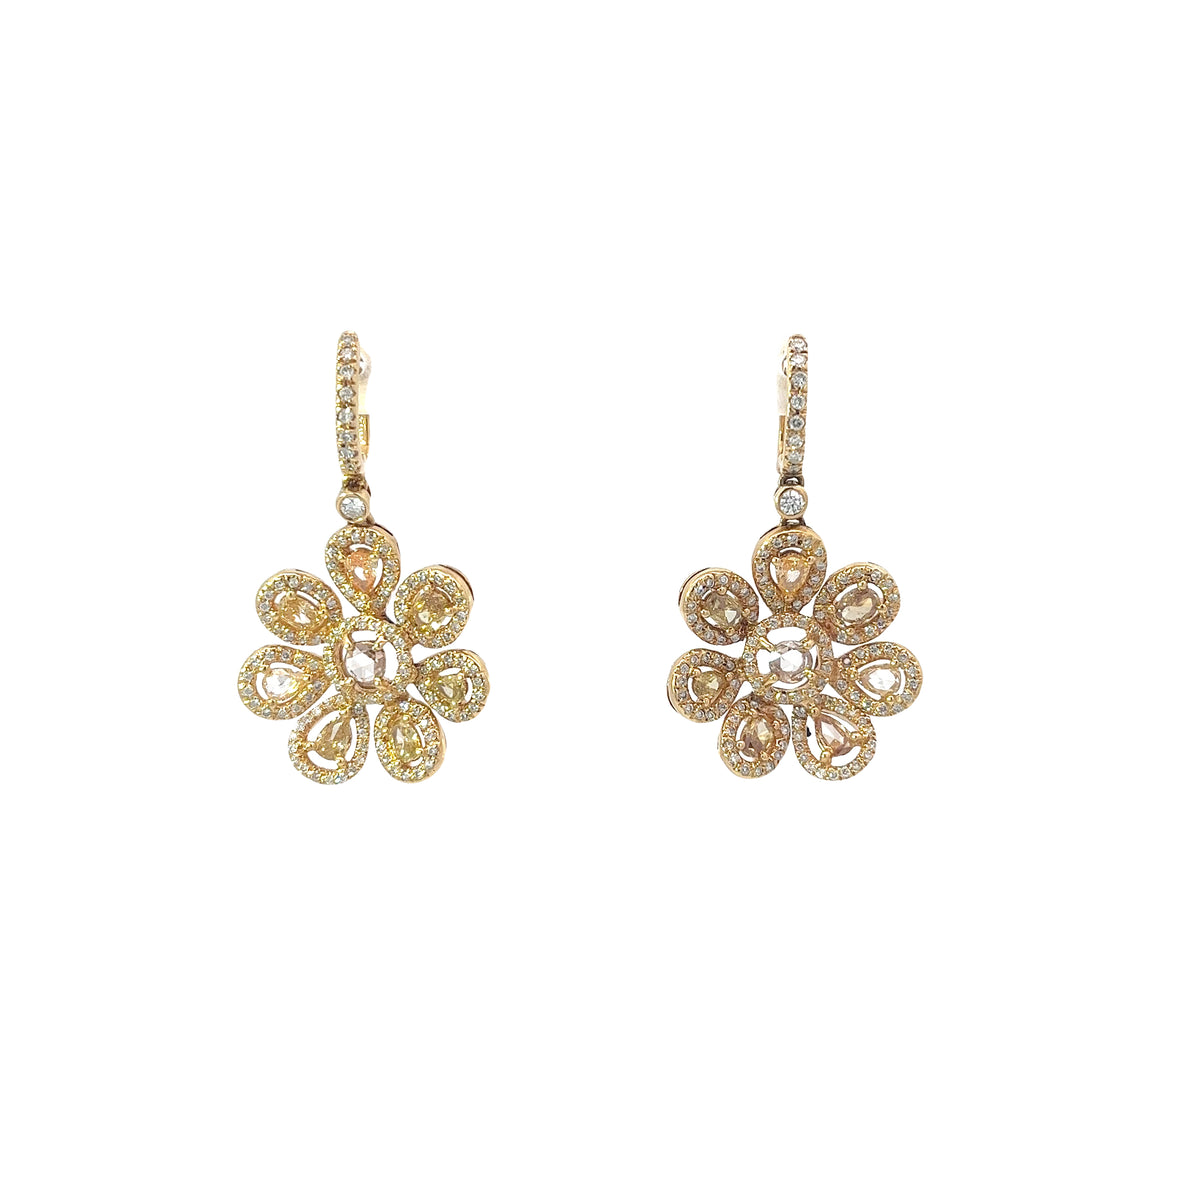 Ladies 18K Yellow Gold Colored Diamond Earrings